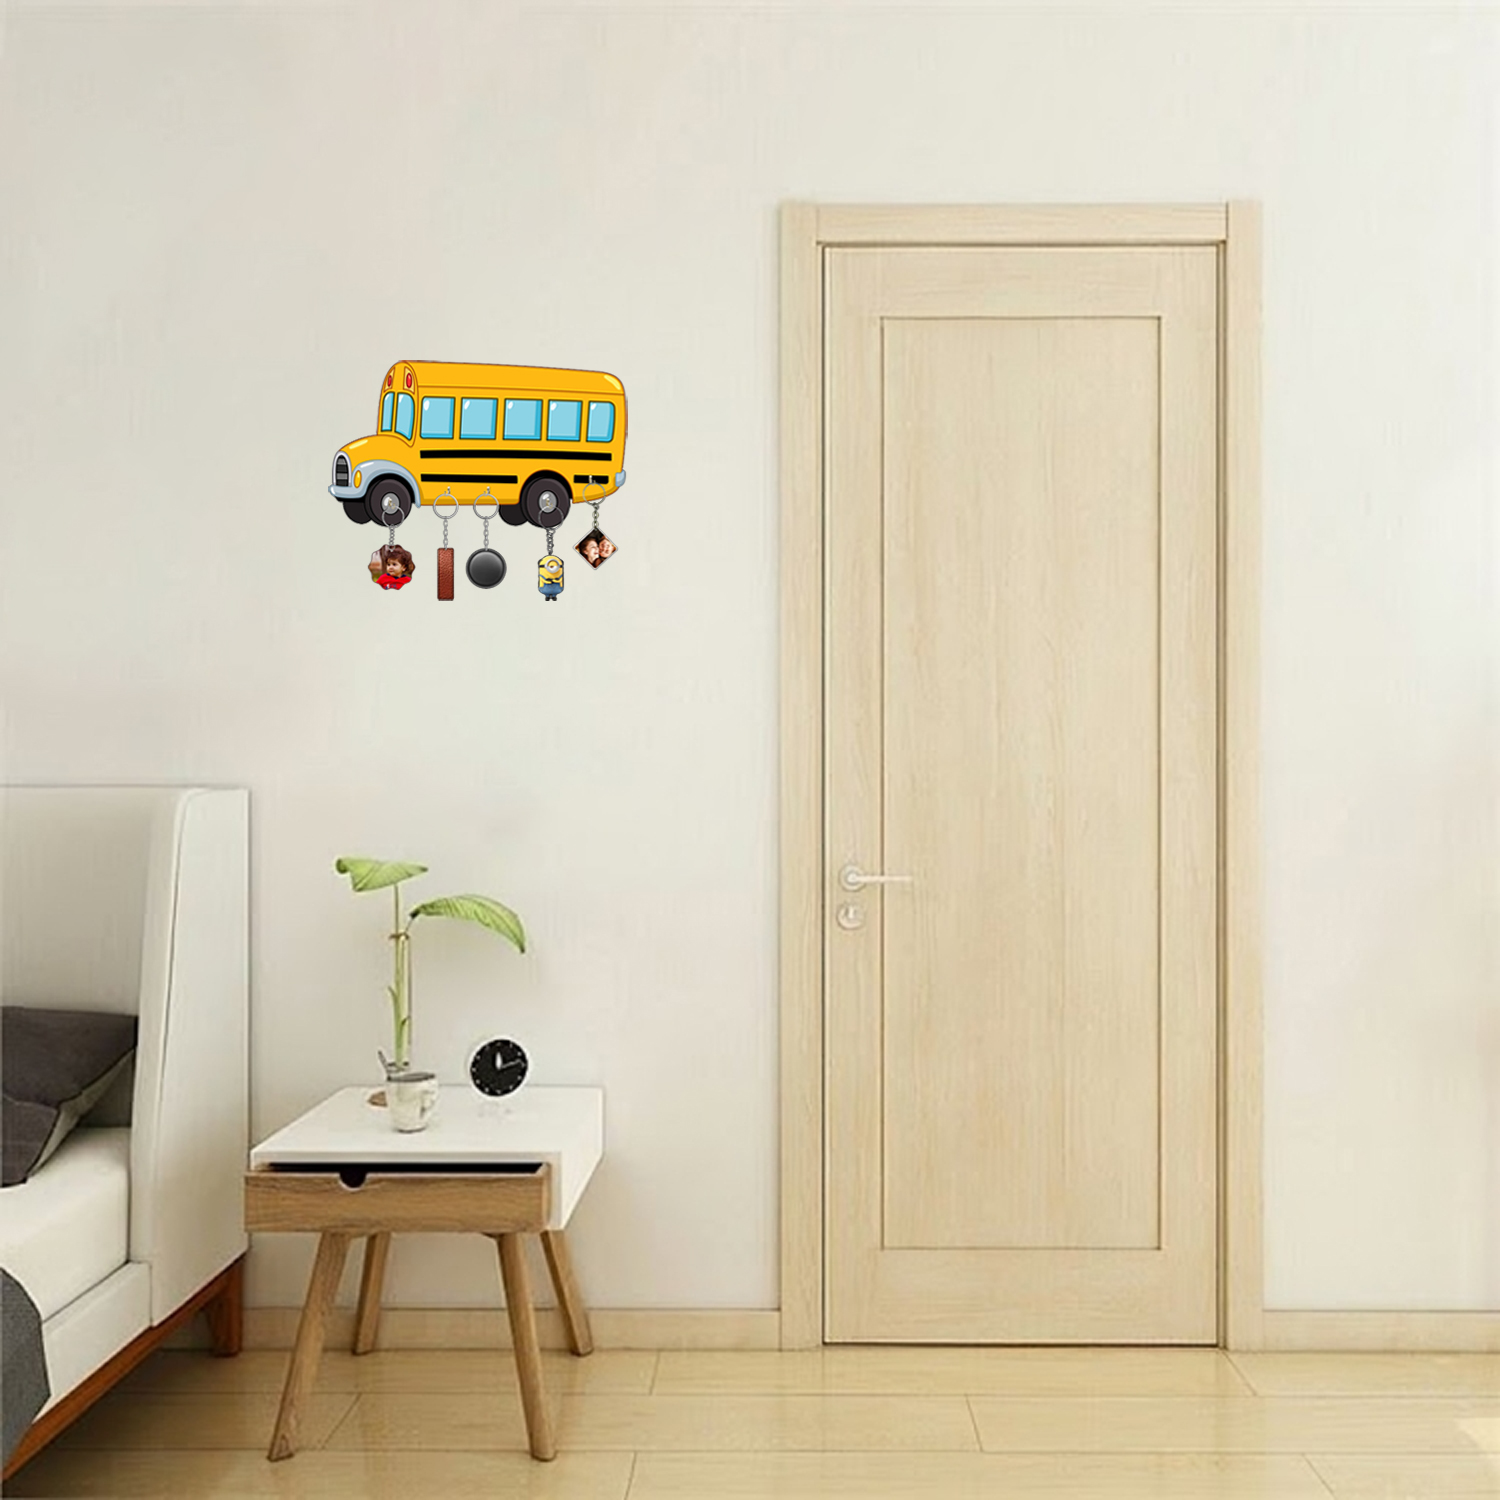 Family Wooden Quirky Van Key Holder For Decor / Living Room